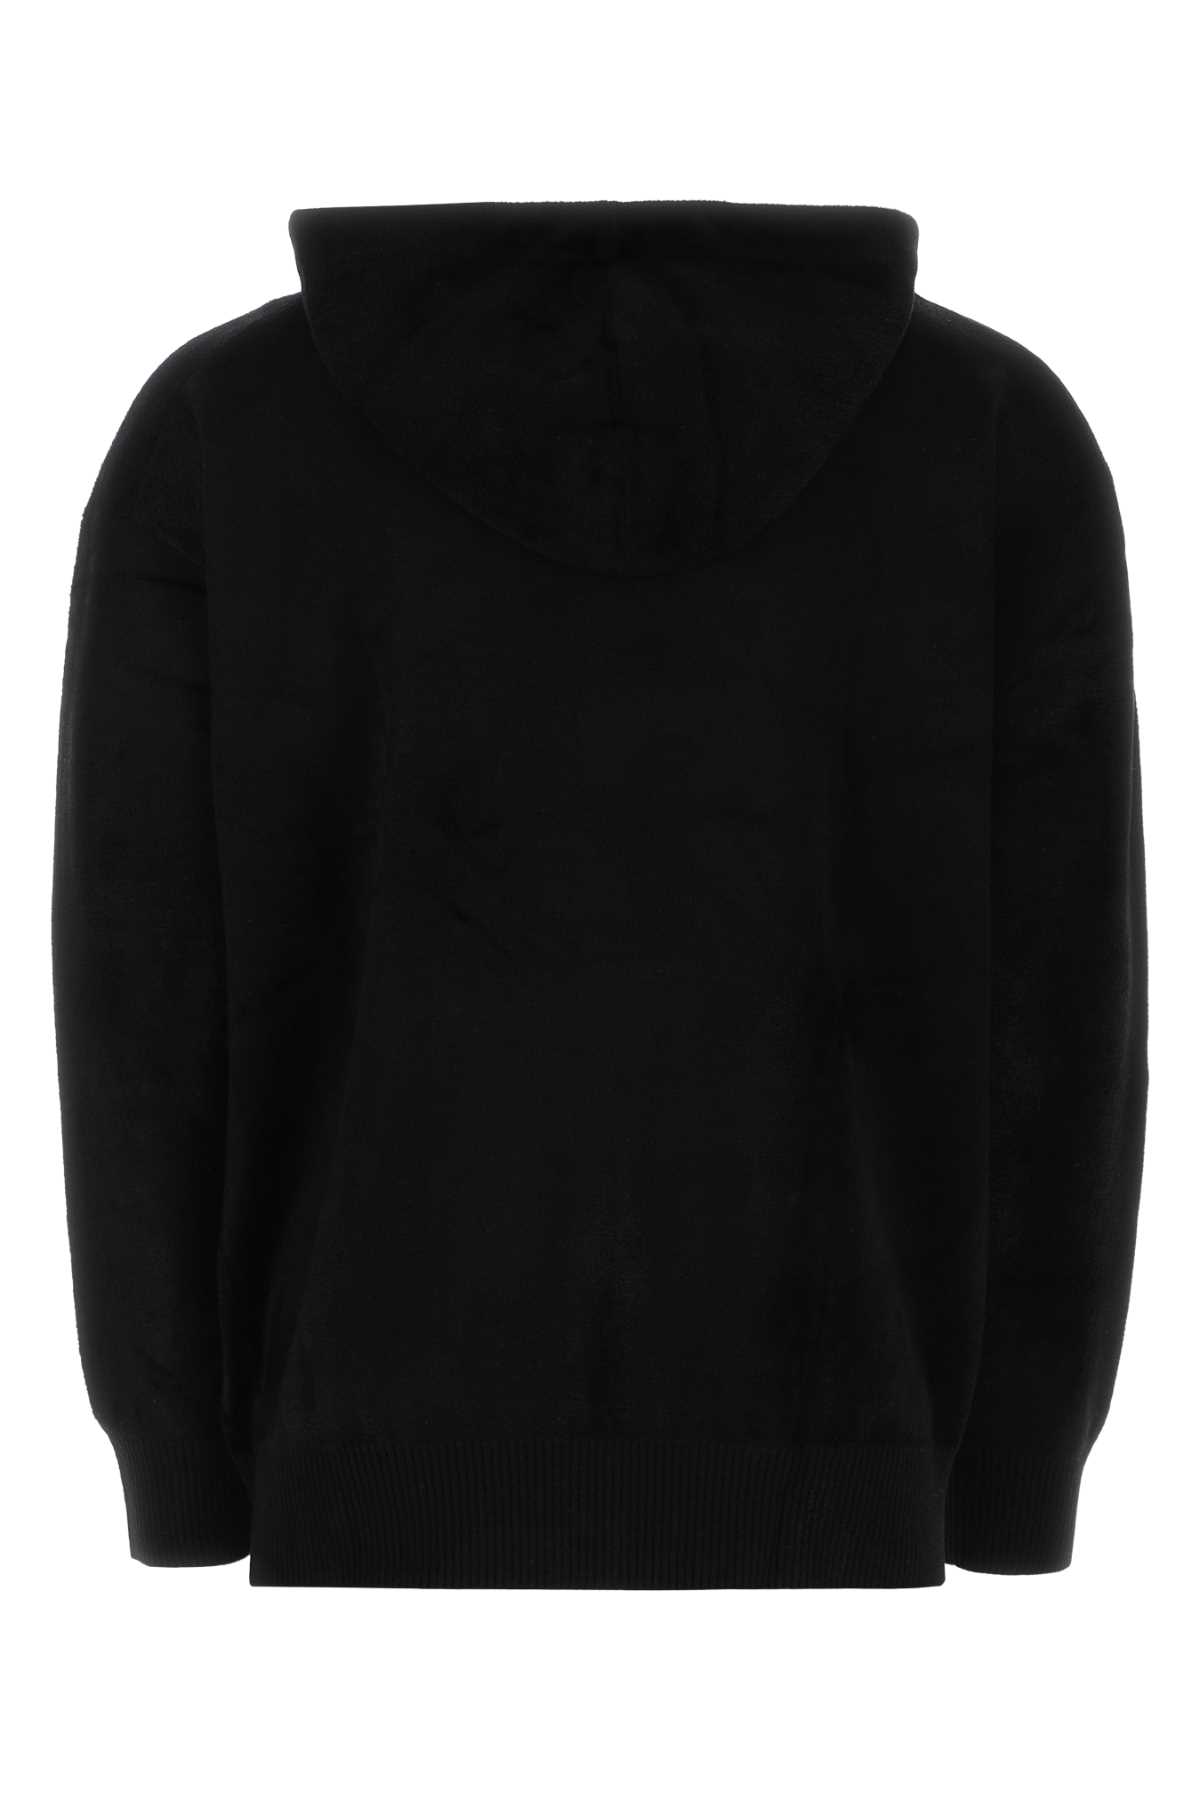 Givenchy Black Viscose Blend Oversize Sweatshirt In 001